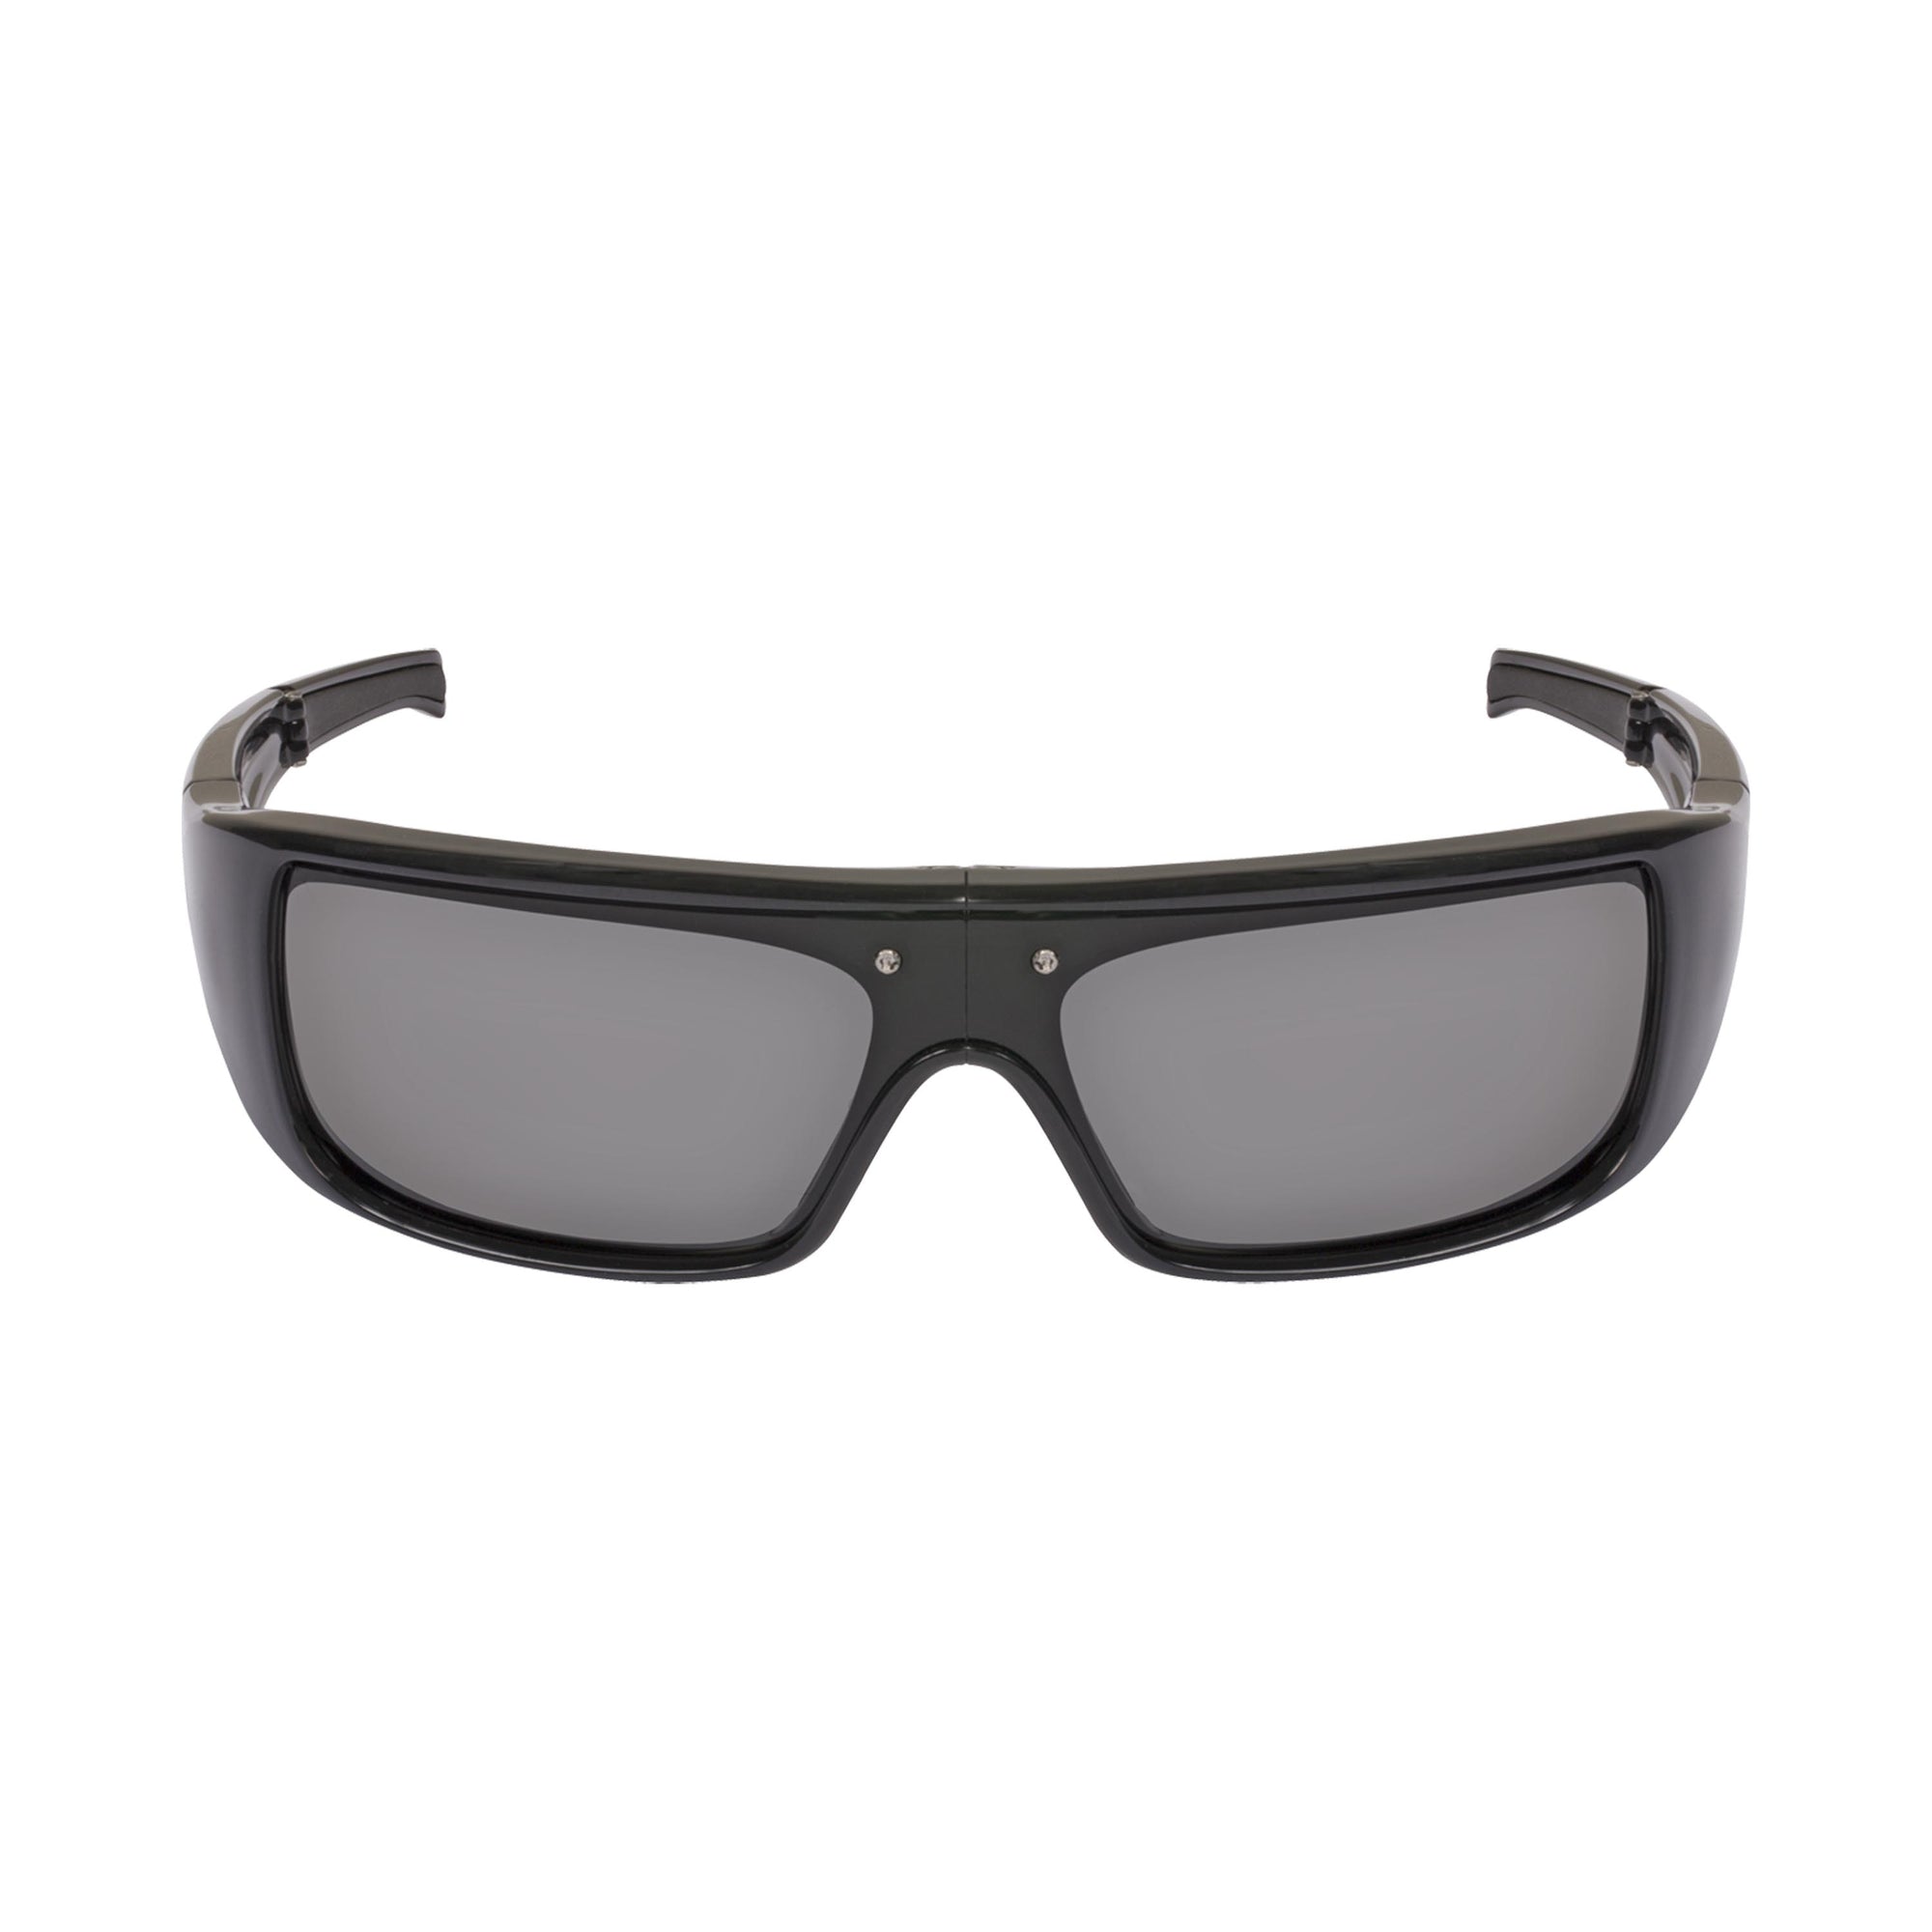 Popticals, Premium Compact Sunglasses, PopGear, 010051-BGGP, Polarized Sunglasses, Gloss Black Frame, Gray Lenses, Front View